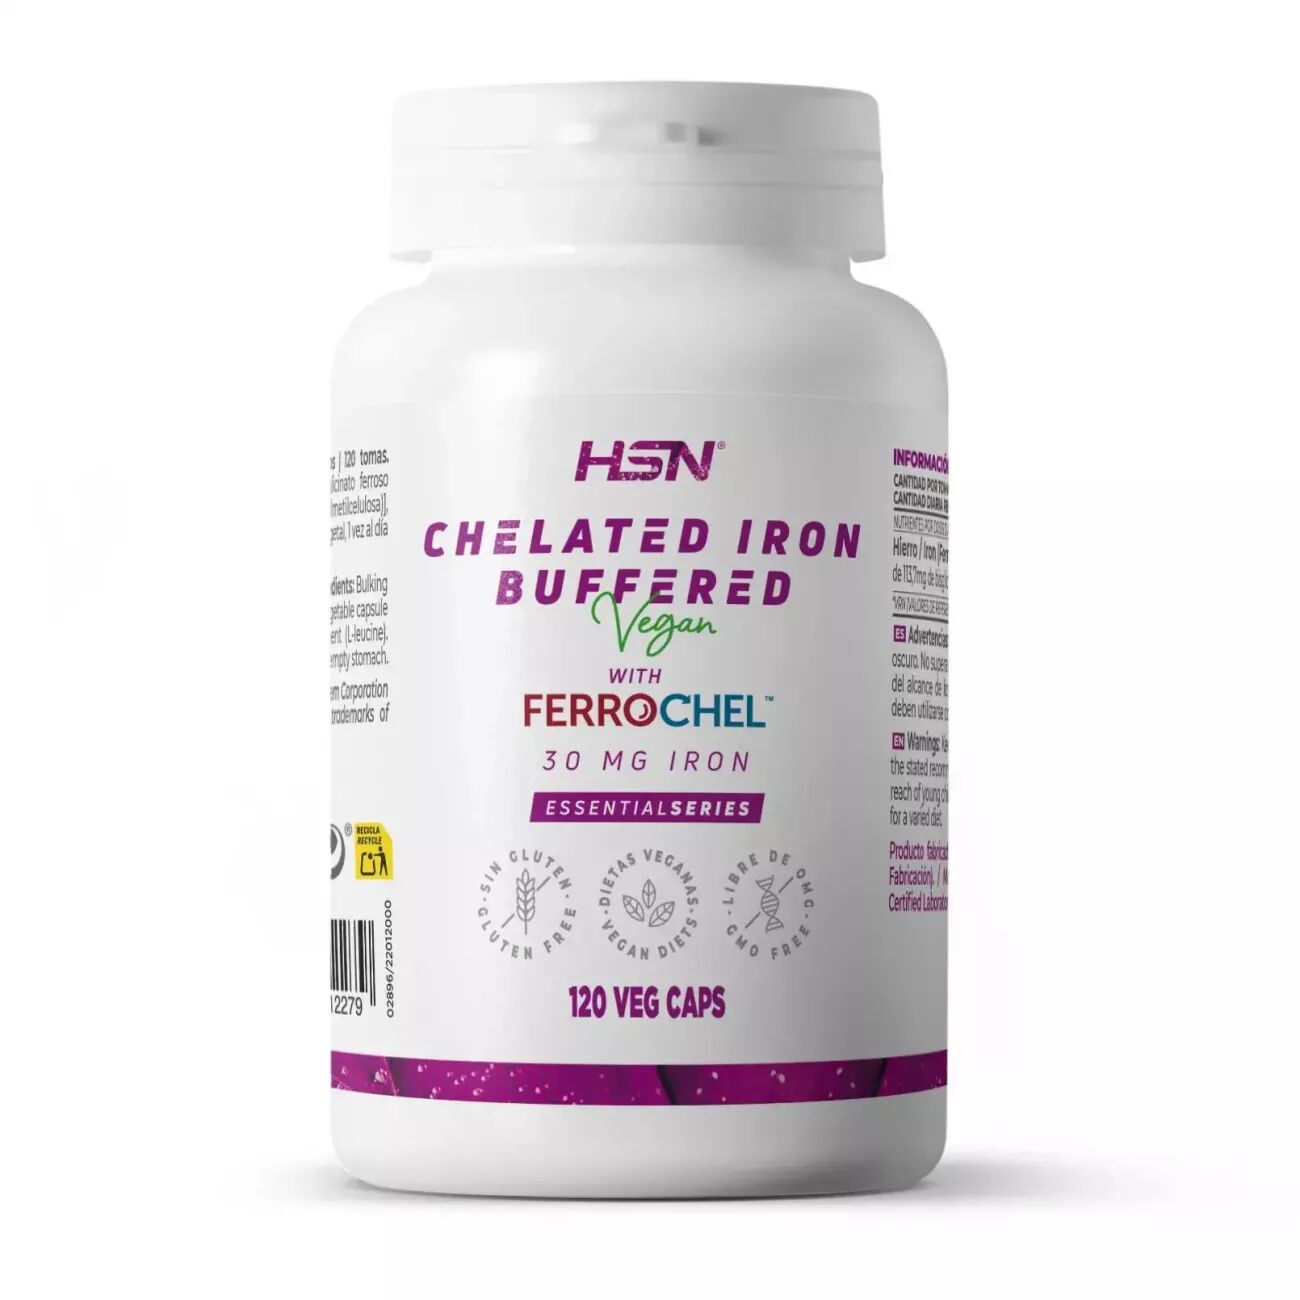 HSN Bisglicinato de hierro ferrochel™️ (30mg hierro) - 120 veg caps